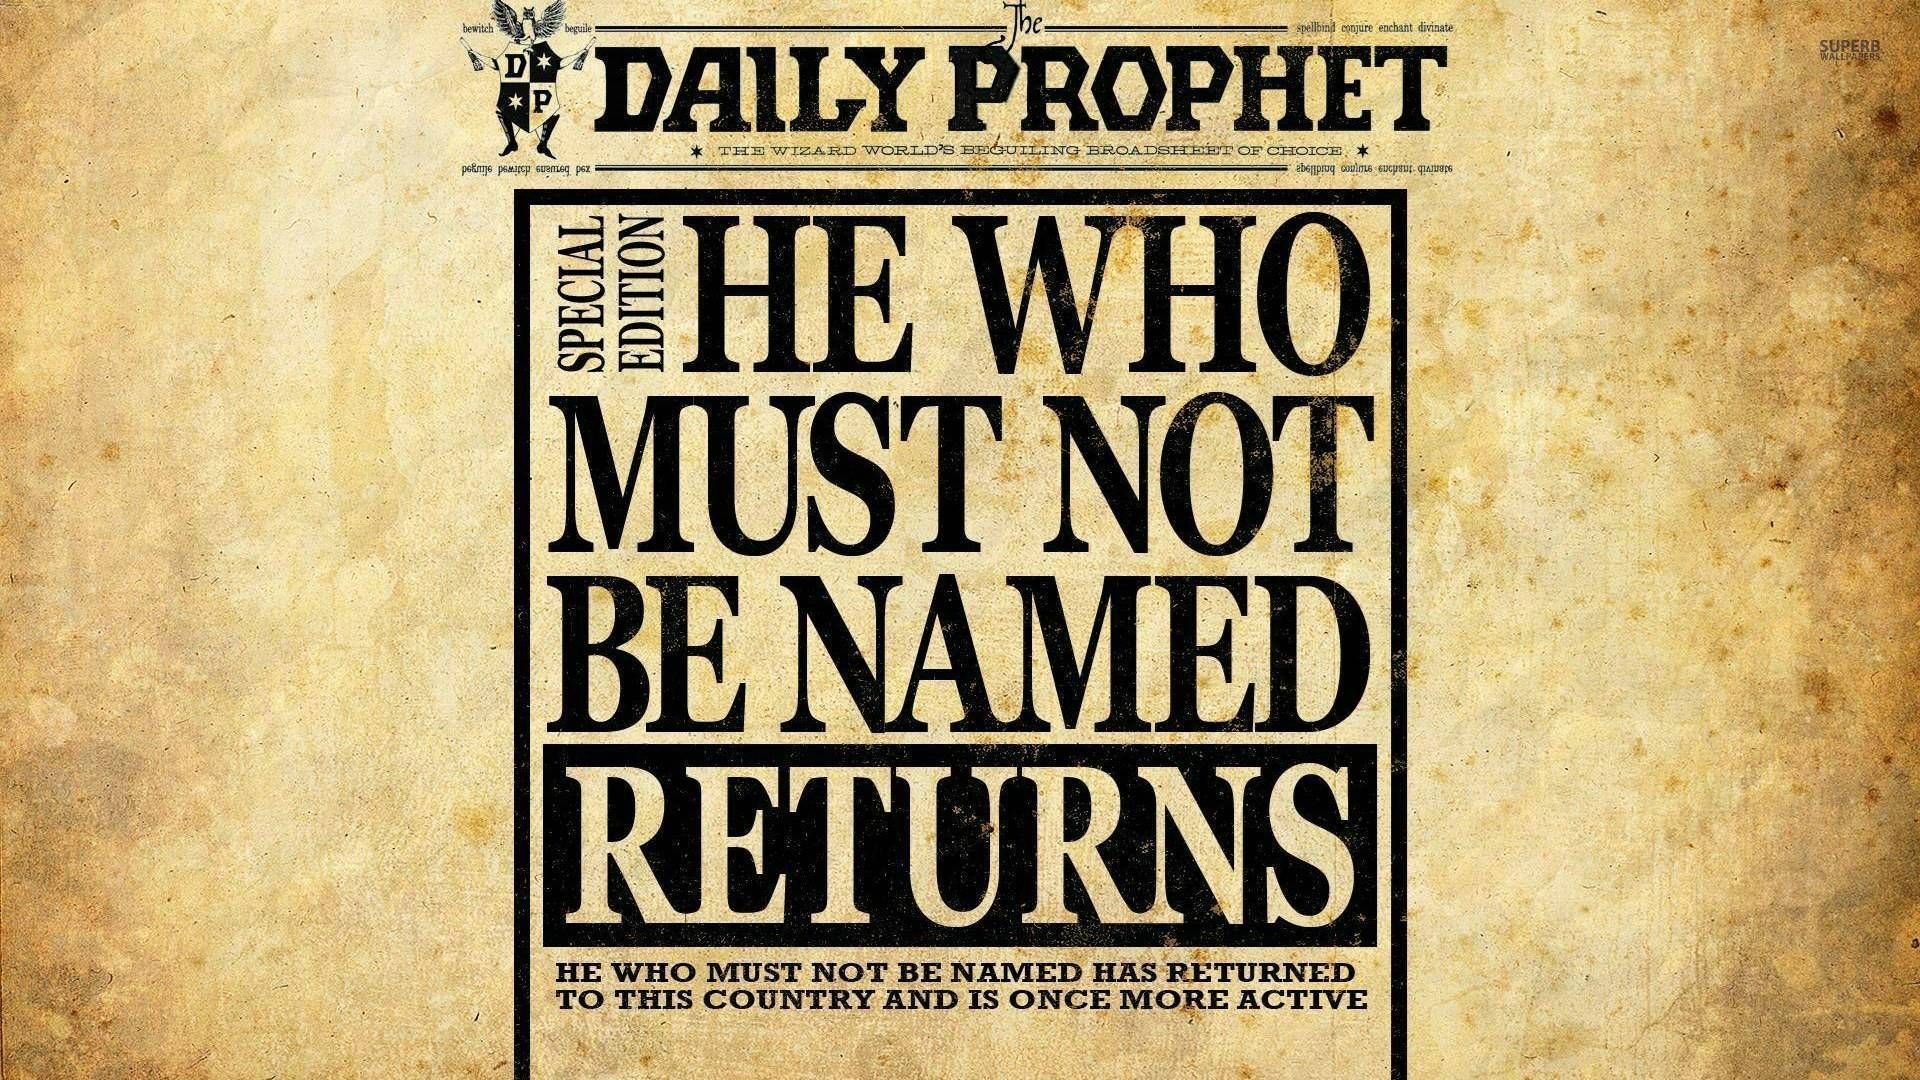 Daily Prophet Potter wallpaper. Harry potter wallpaper, Harry potter wallpaper, Daily prophet